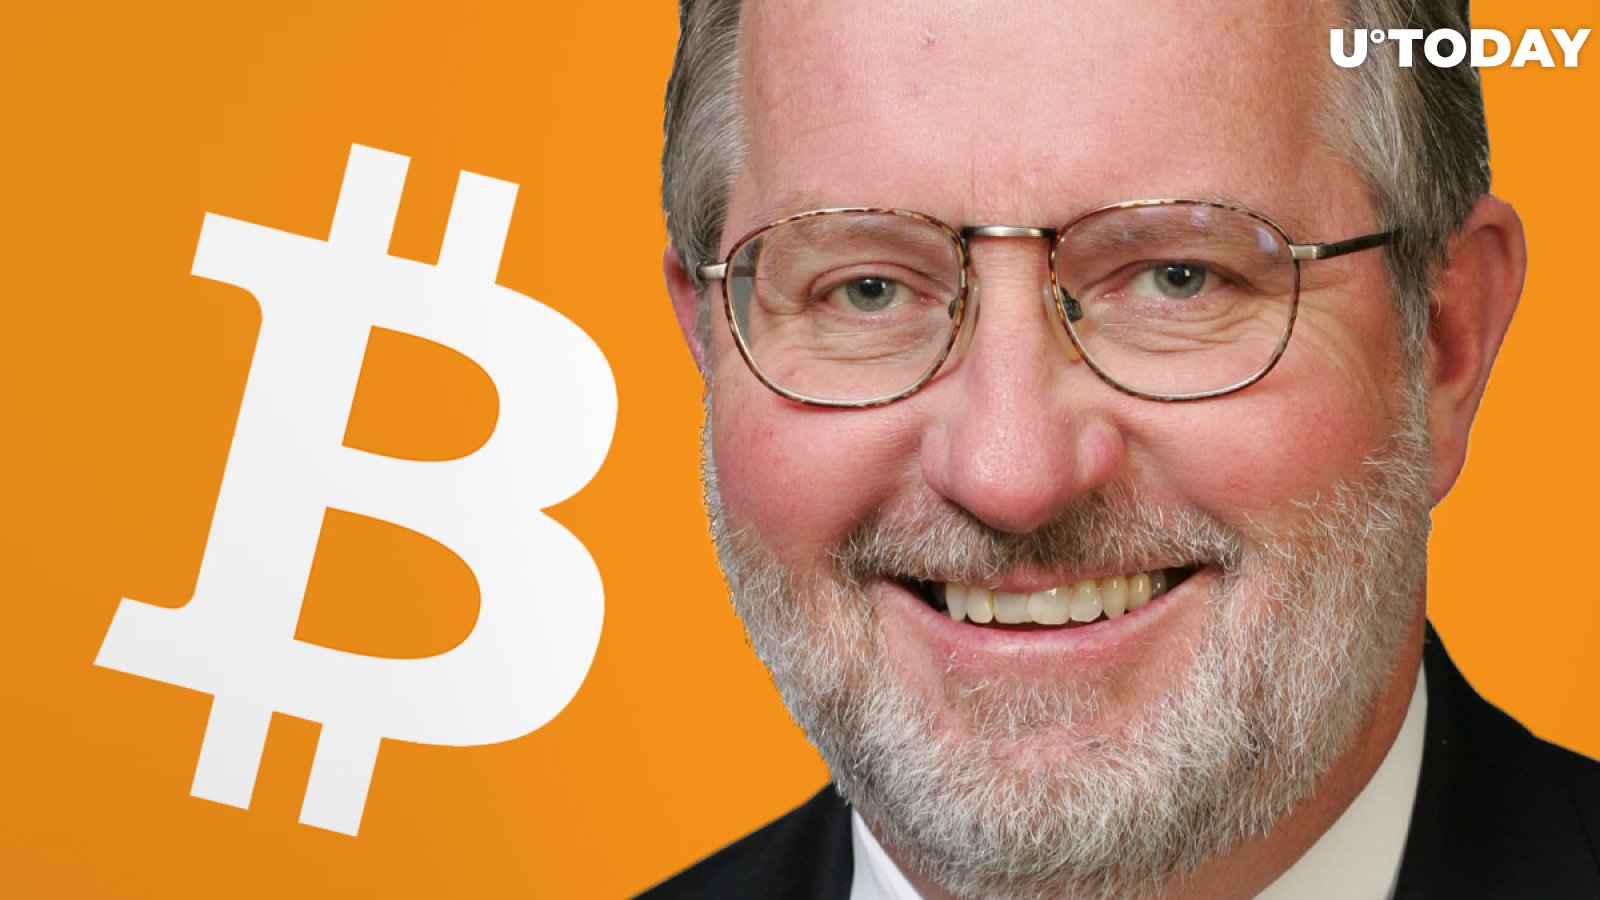 Economist Dennis Gartman Lambasts Bitcoin as "Utterly Illogical"